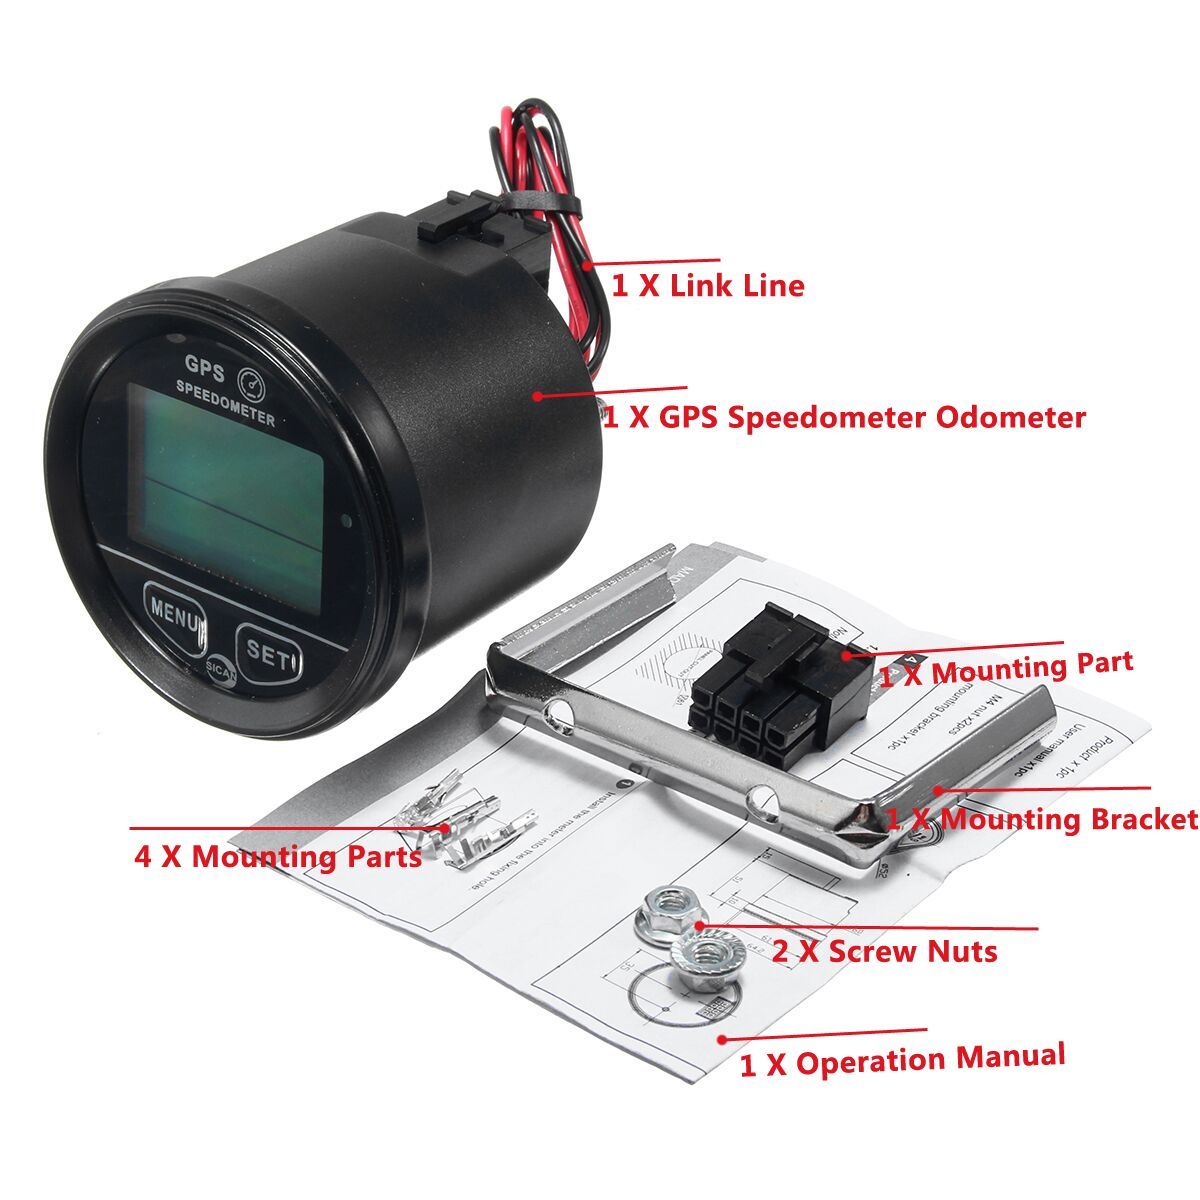 60mm-GPS-Speedometer-Odometer-LCD-Digital-Display-12V-24V-for-Motorcycle-Marine-Boat-Truck-1360048